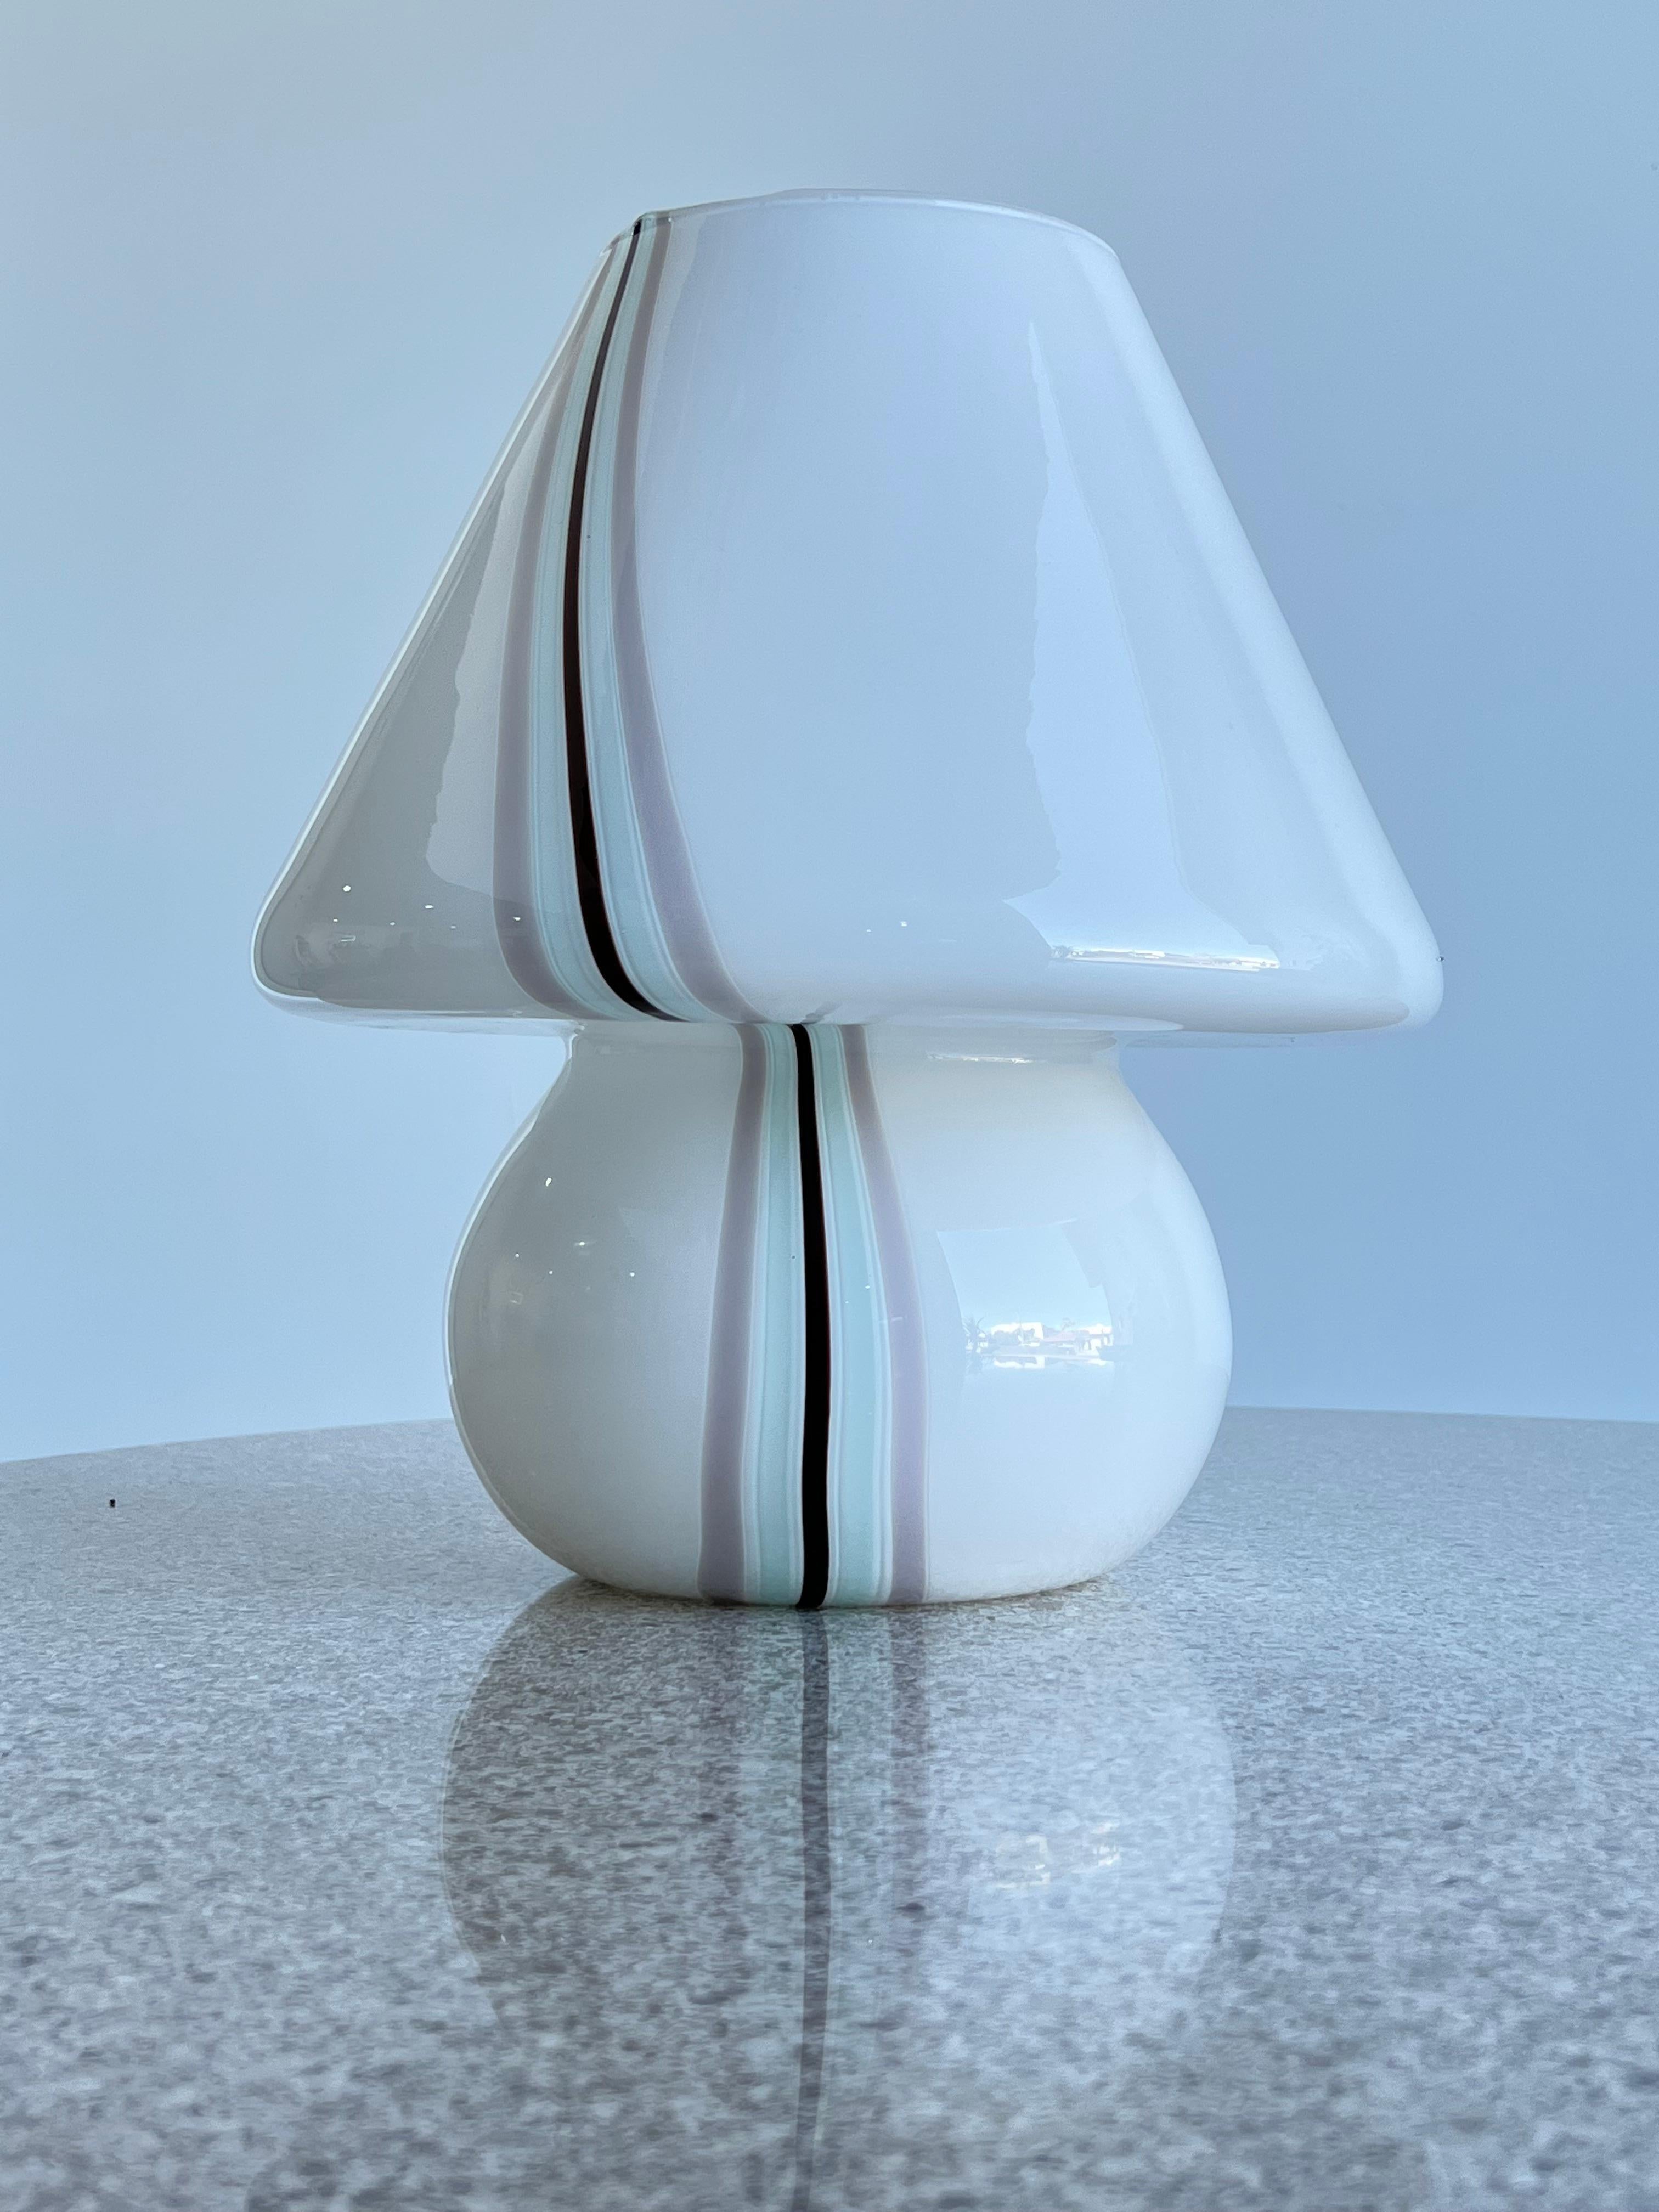 Beutifull Mushroom-shaped table lamp, Murano glass by Paolo Venini 1970s.